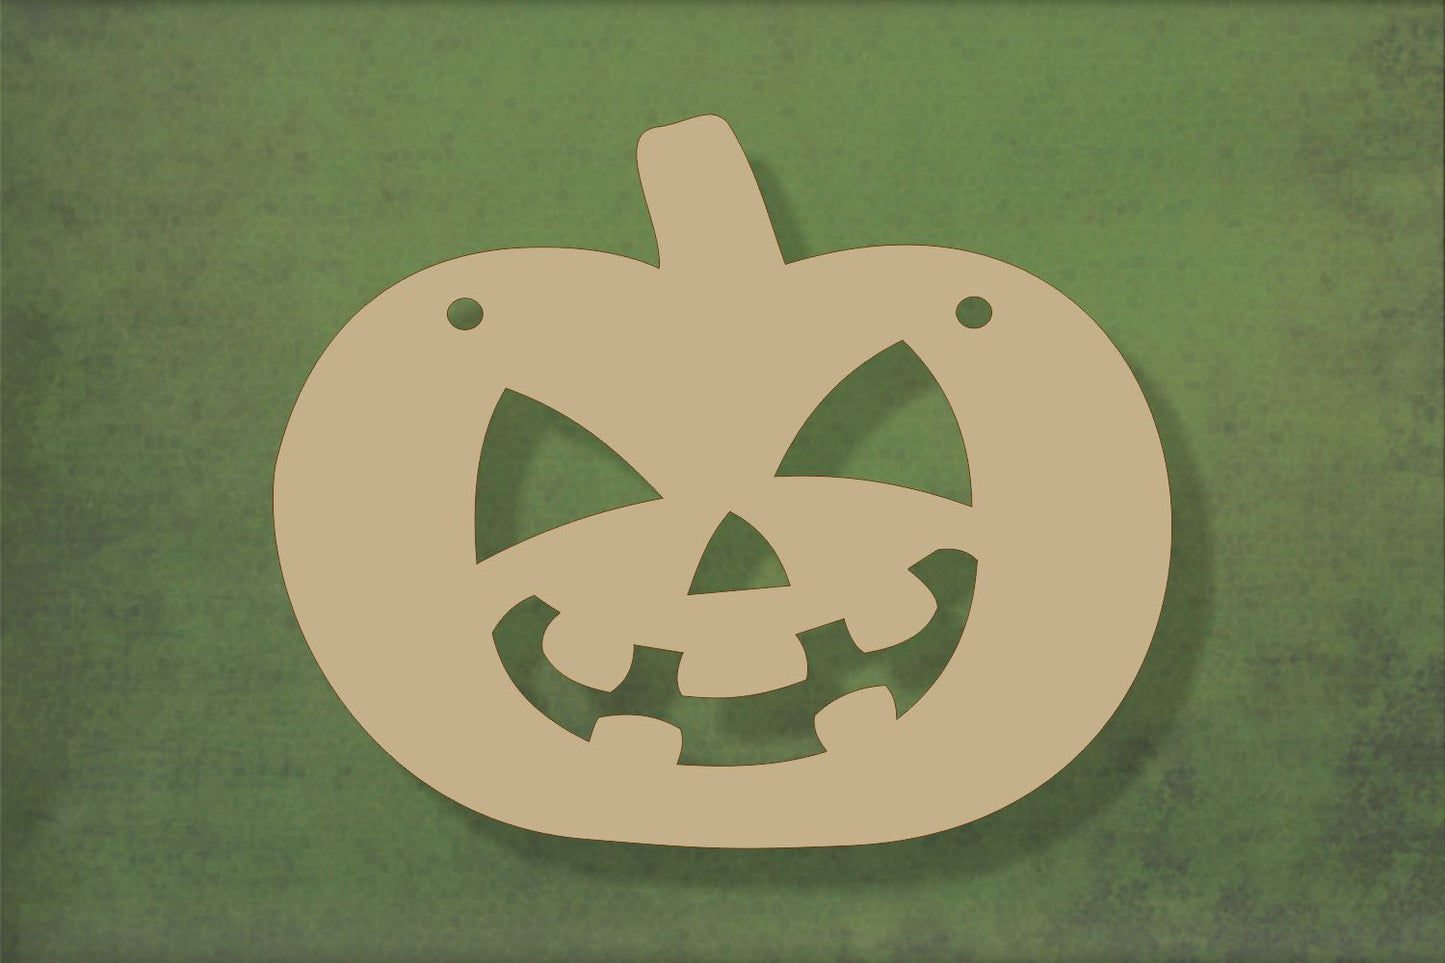 Laser cut, blank wooden Pumpkin 3 with halloween face shape for craft